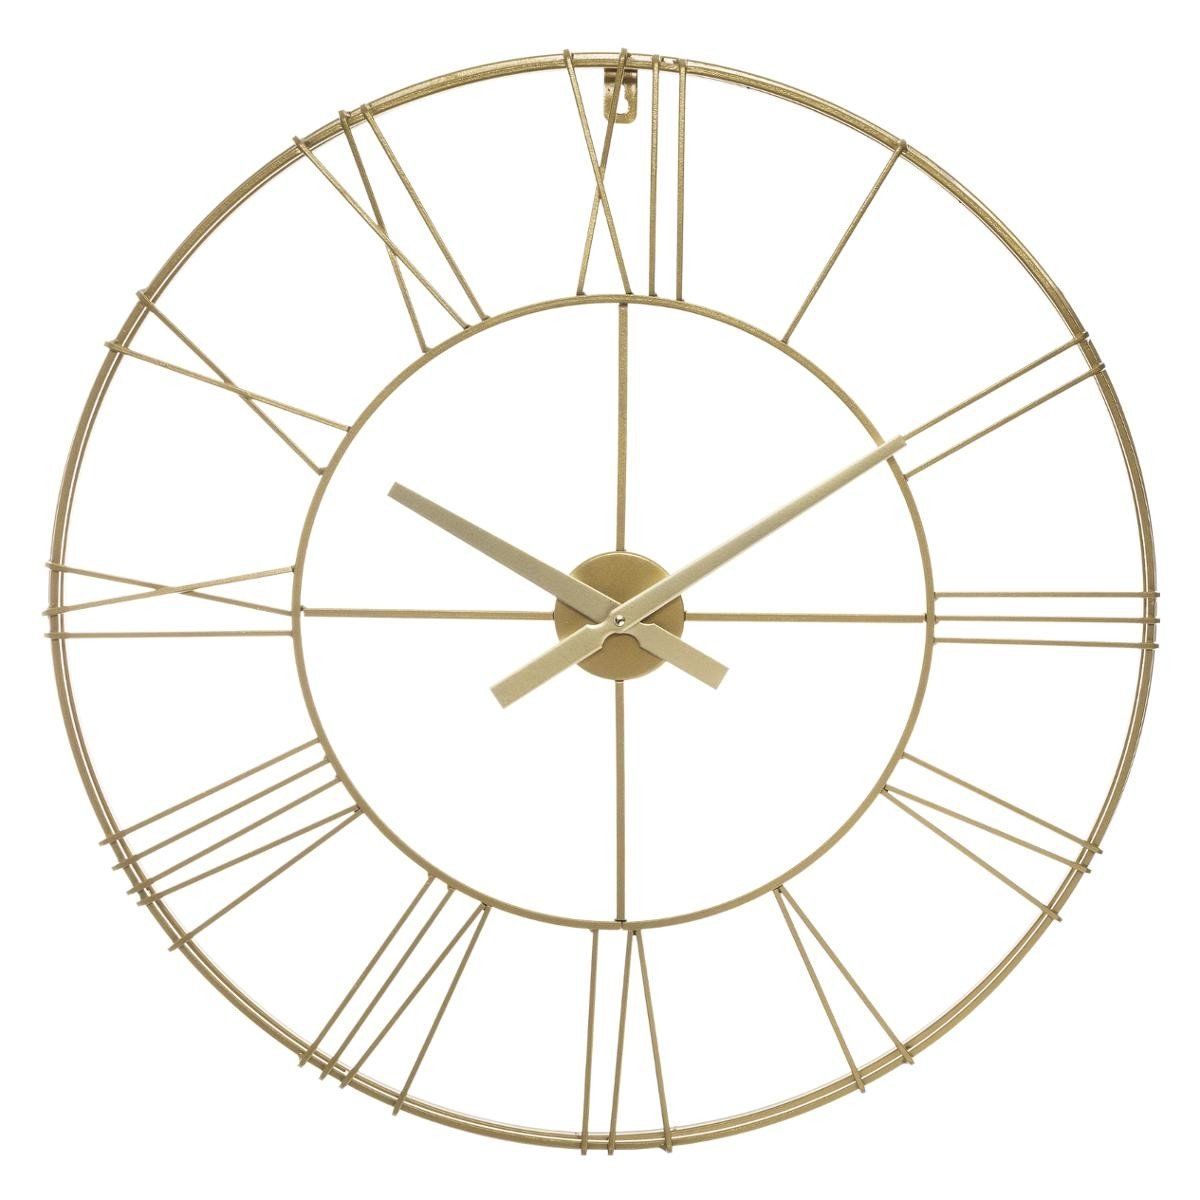 Atmosphera Nástěnné hodiny, kovové, zlaté, O 70 cm - EDAXO.CZ s.r.o.